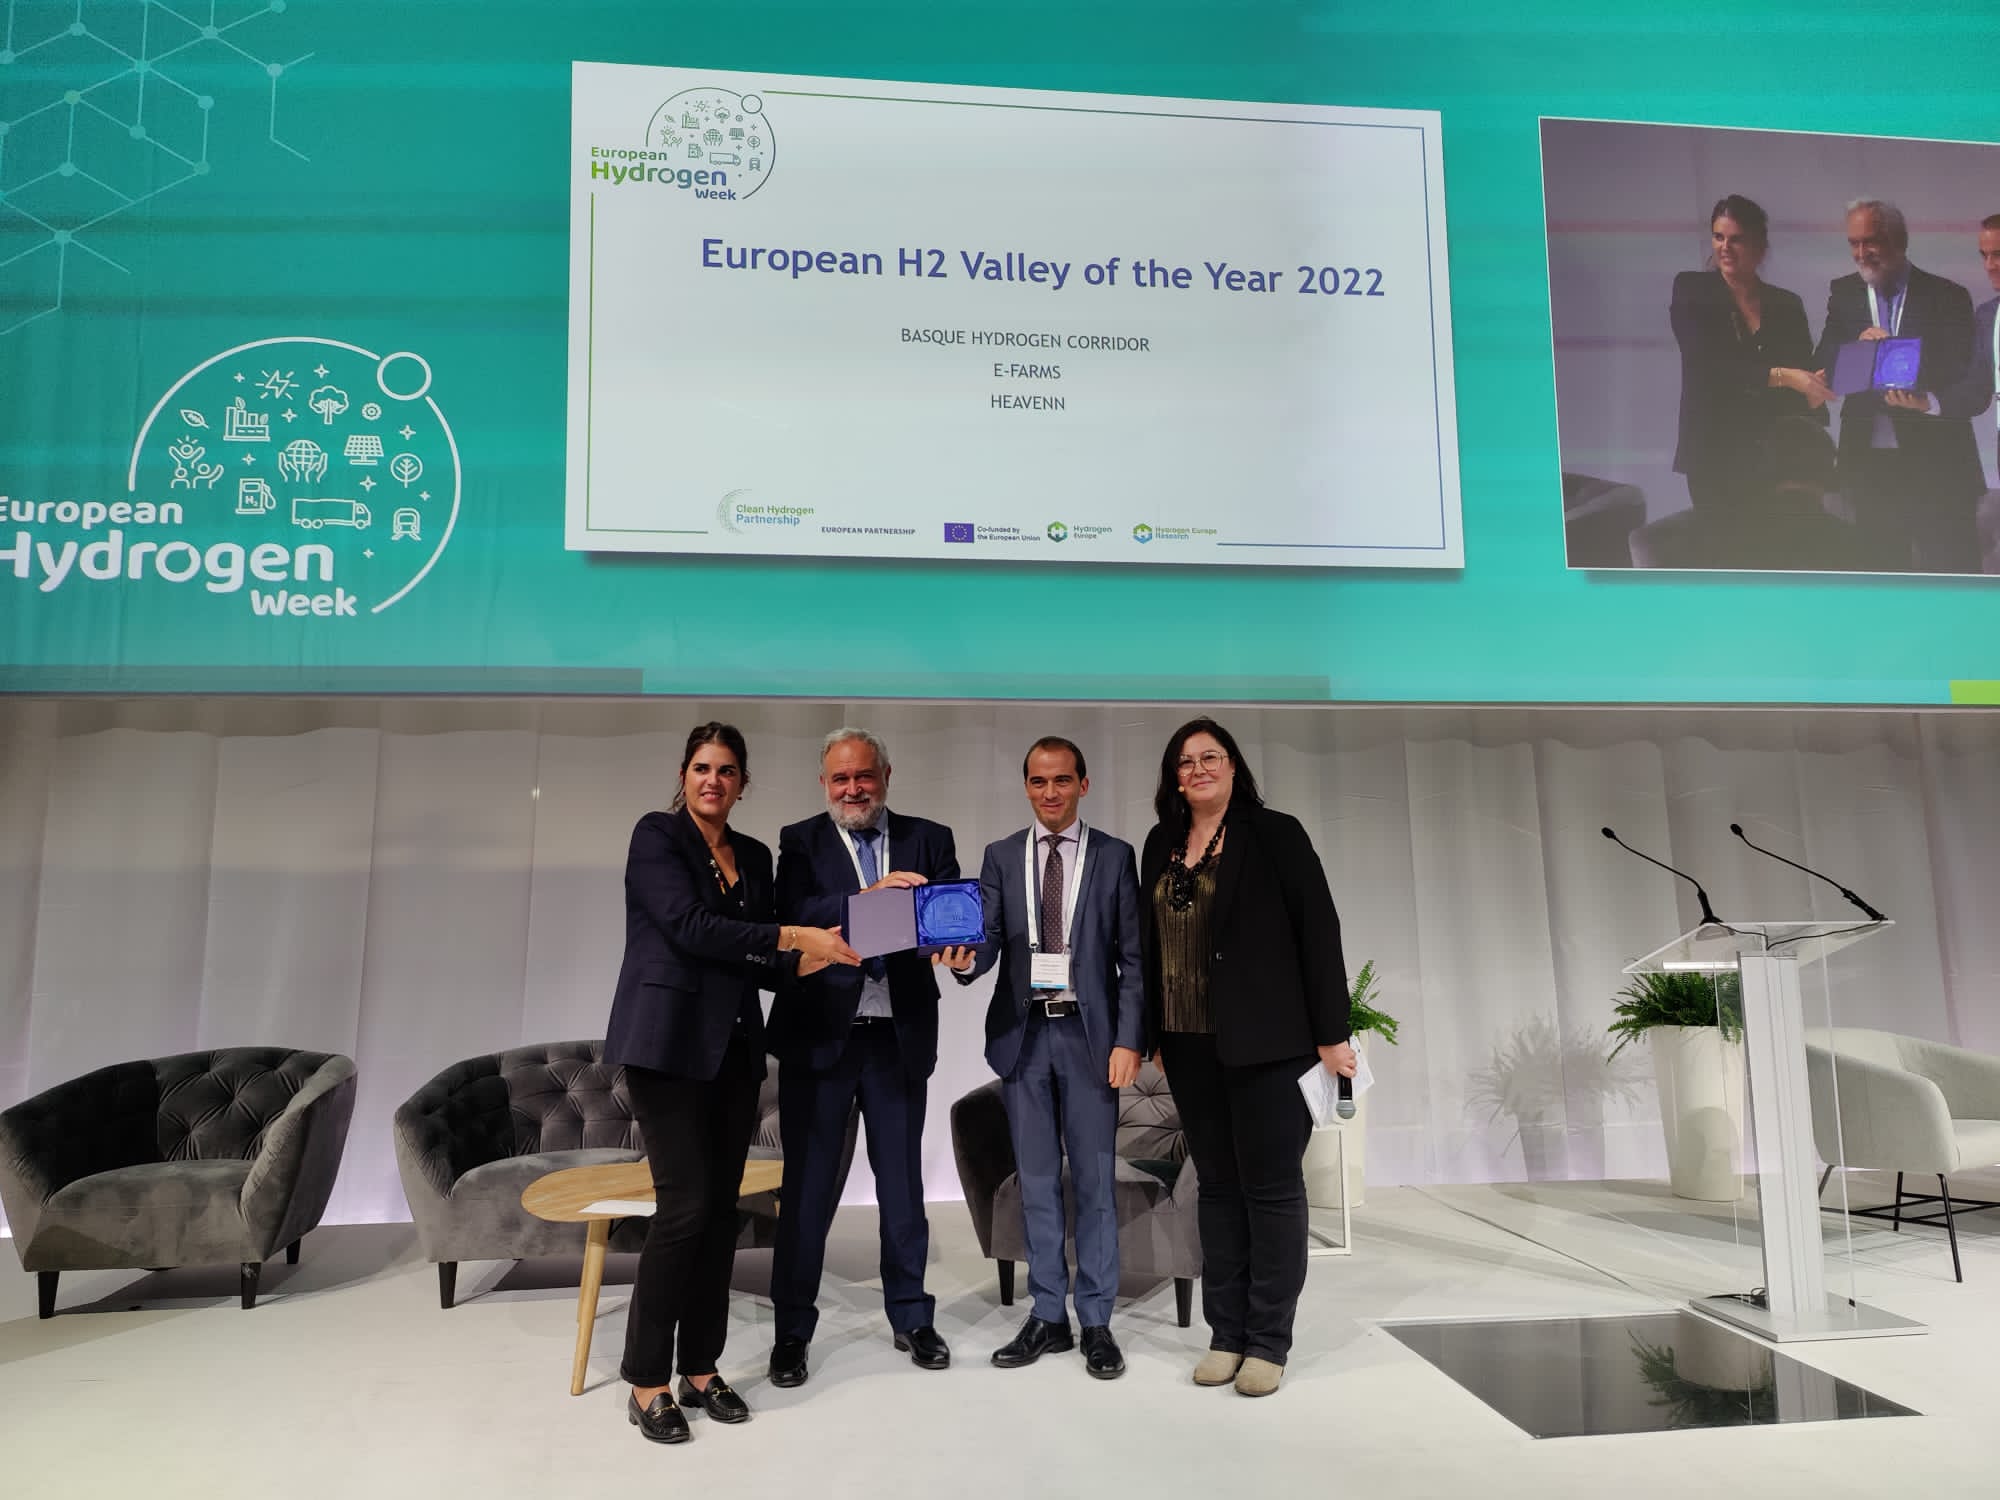 European H2 Valley 2022 Award: a triple valley success